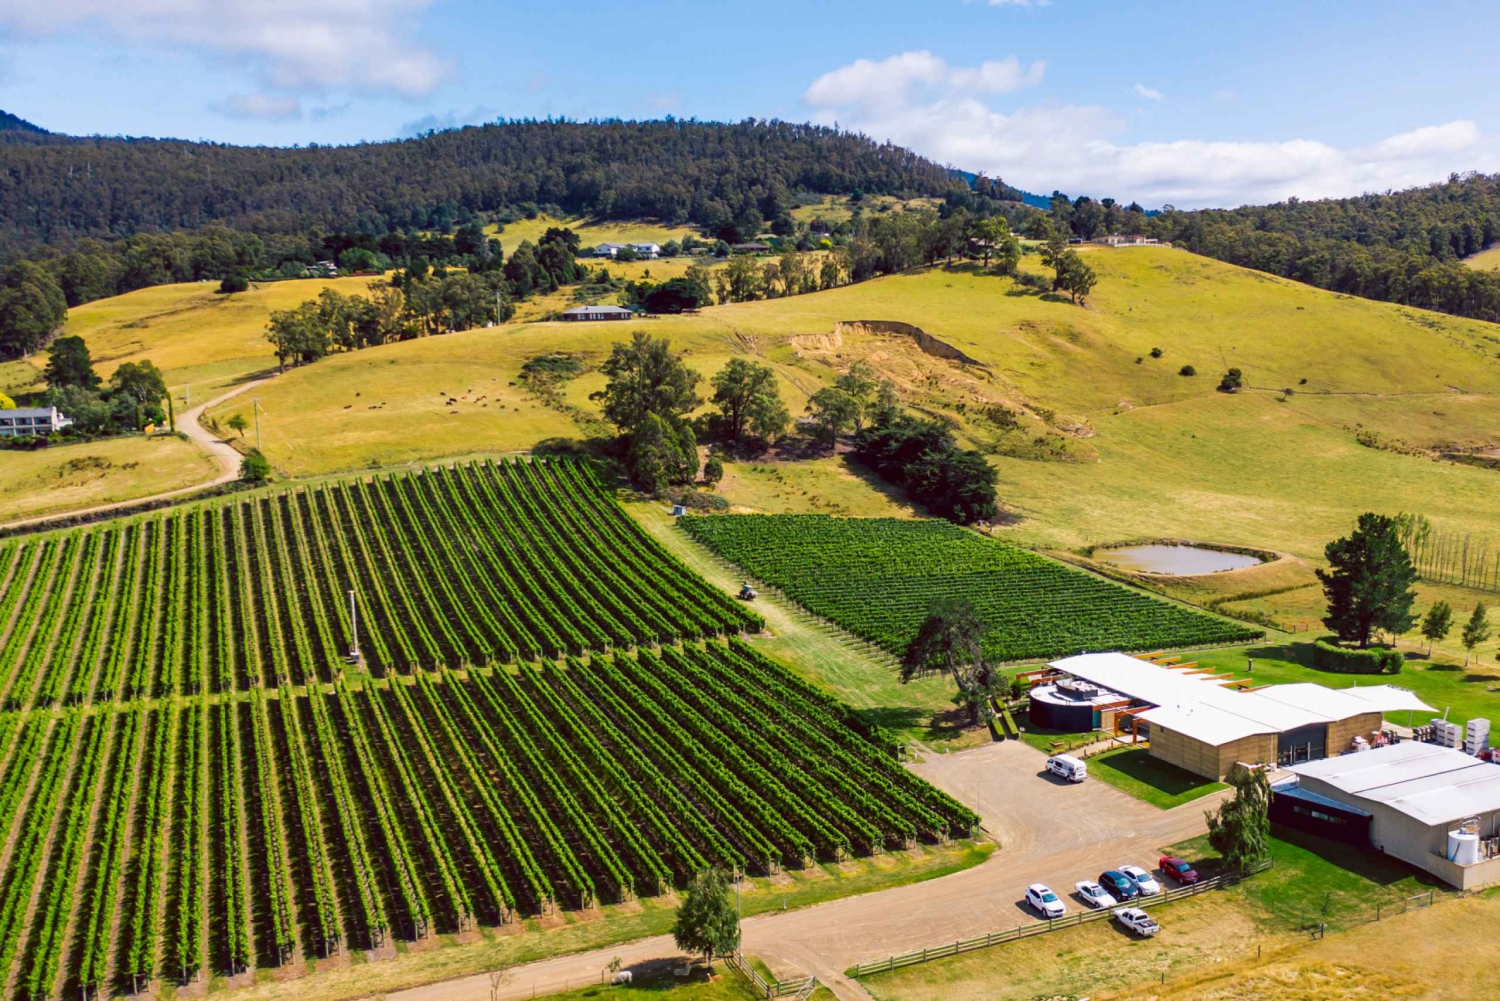 Hobart: Best of Tasmanian Wine Day Tour